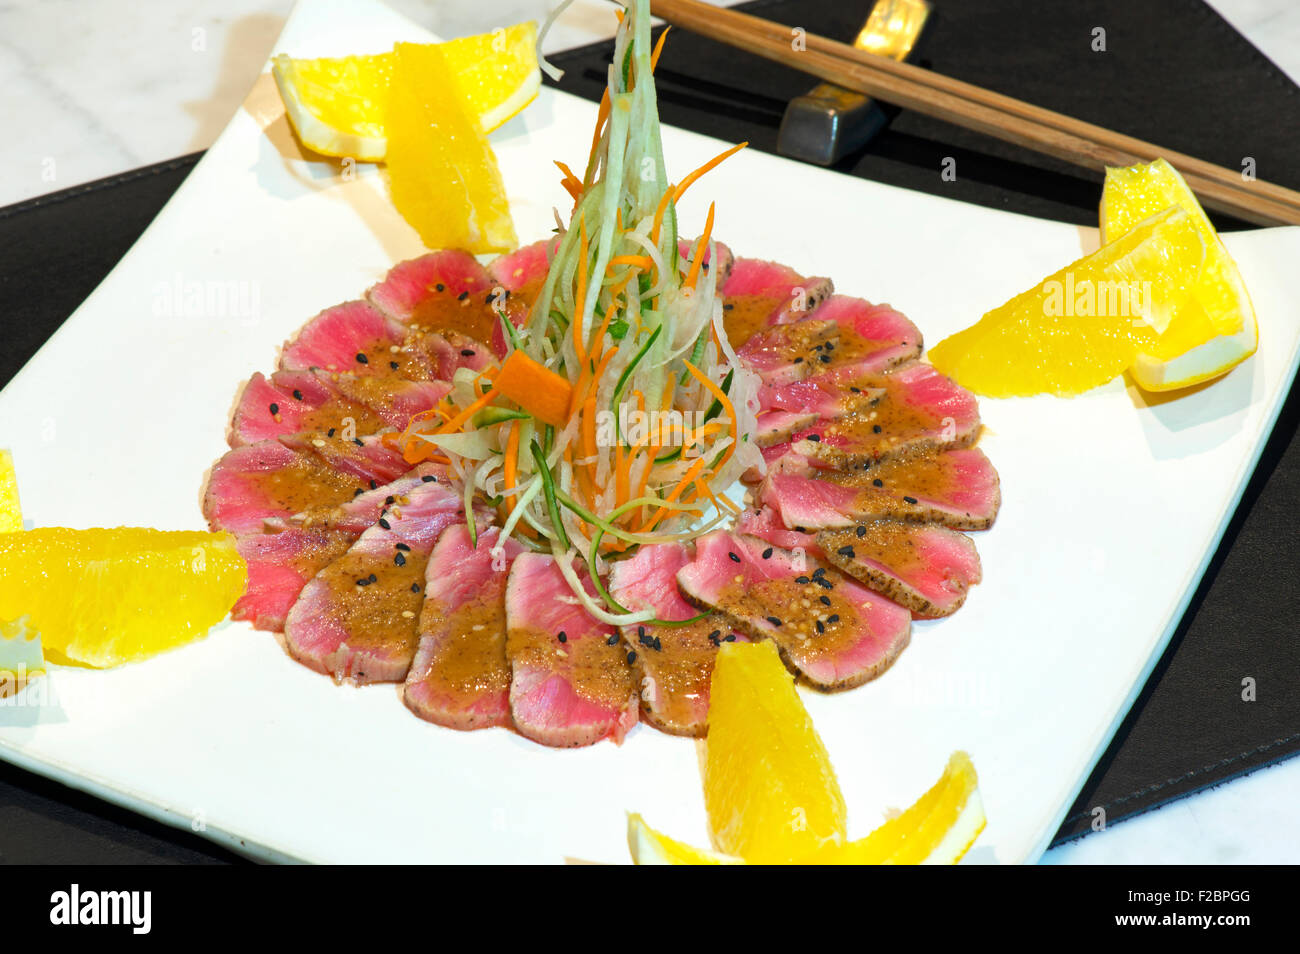 Japanese raw fish dish with very nice arrangement Stock Photo